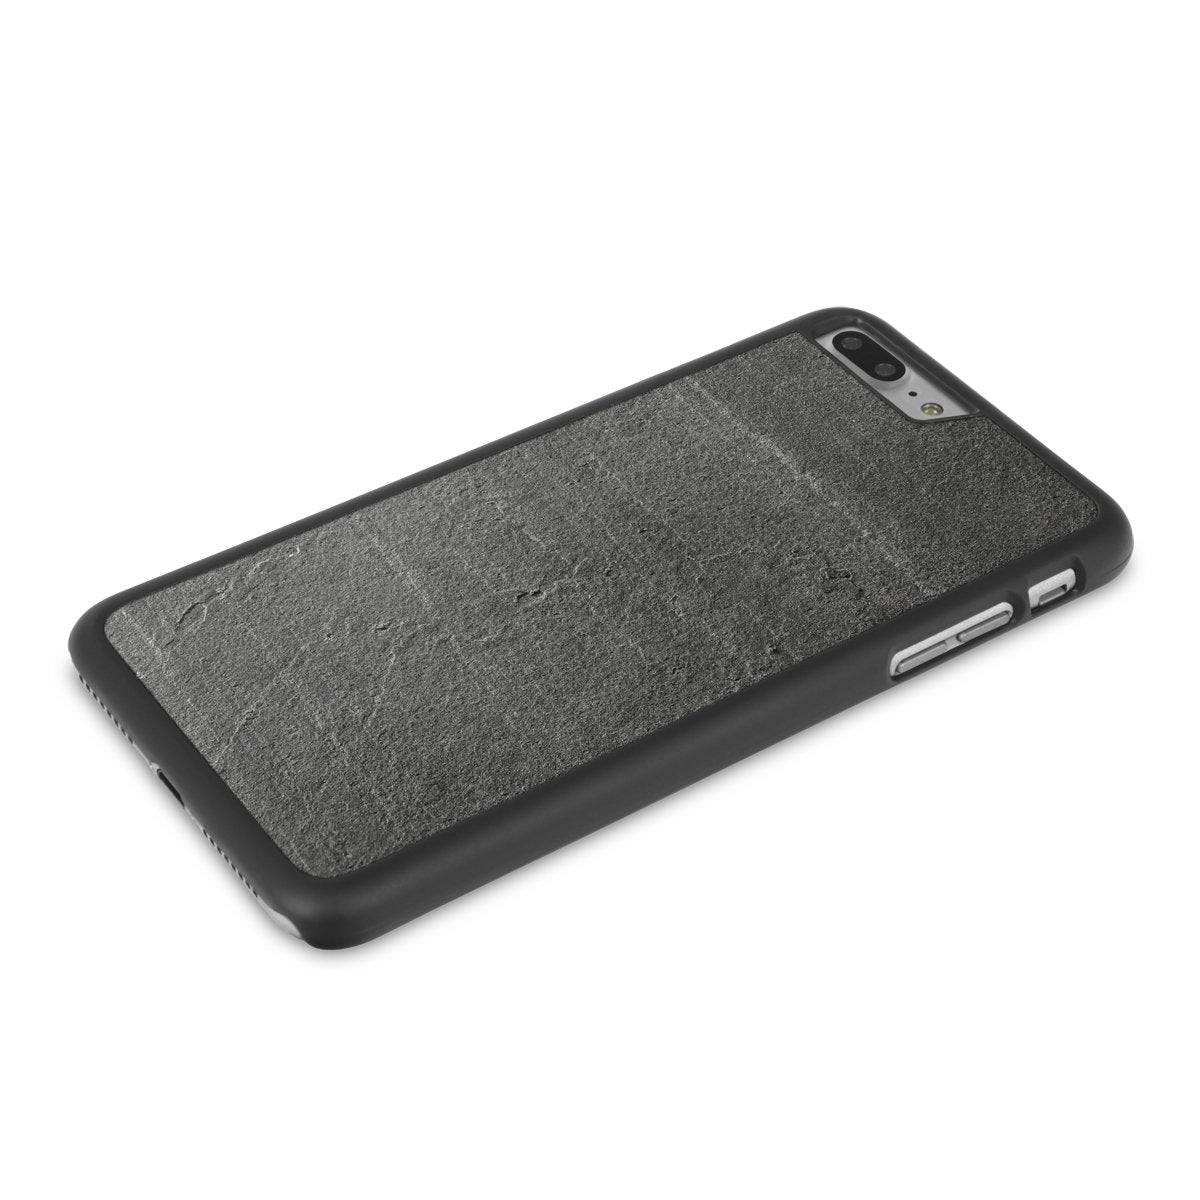 iPhone 8 Plus —  Stone Snap Case